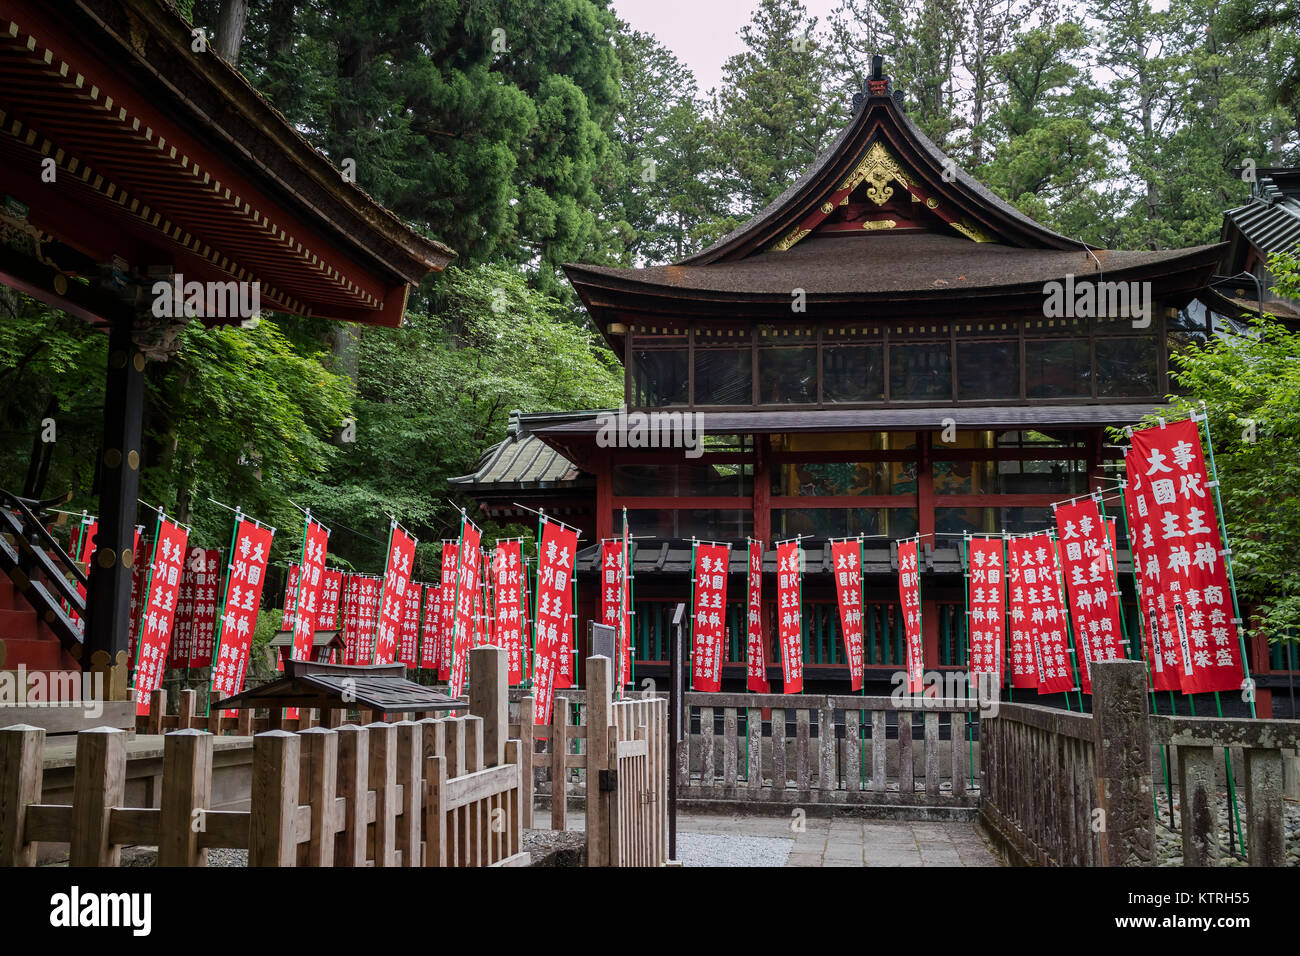 Fujiyoshida city - Japan, June 13, 2017: Red shrine banners at the Fujiyoshida Sengen Shrine in Fujiyoshida city Stock Photo